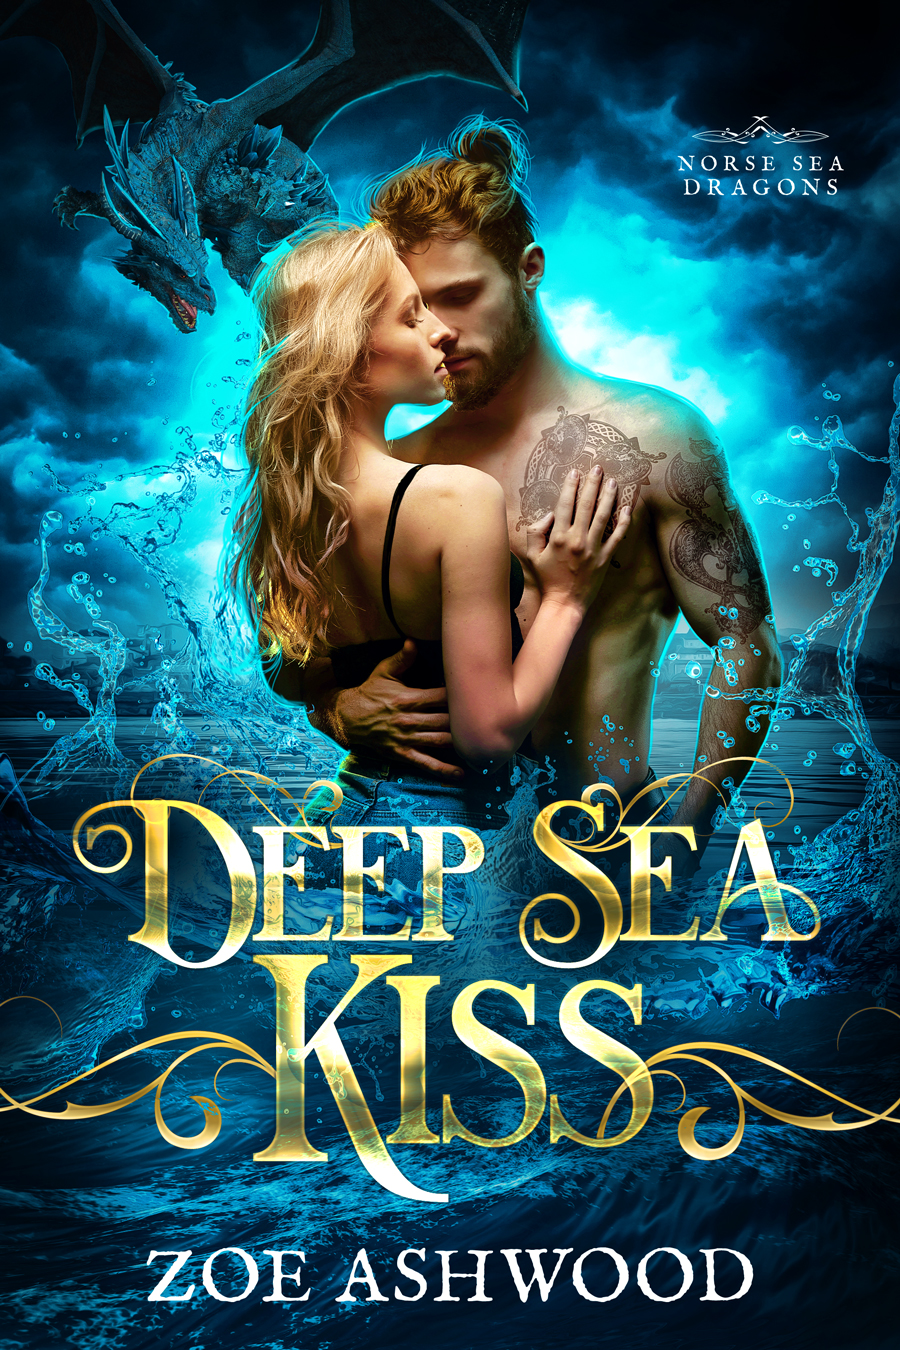 Deep Sea Kiss by Zoe Ashwood - steamy paranormal romance